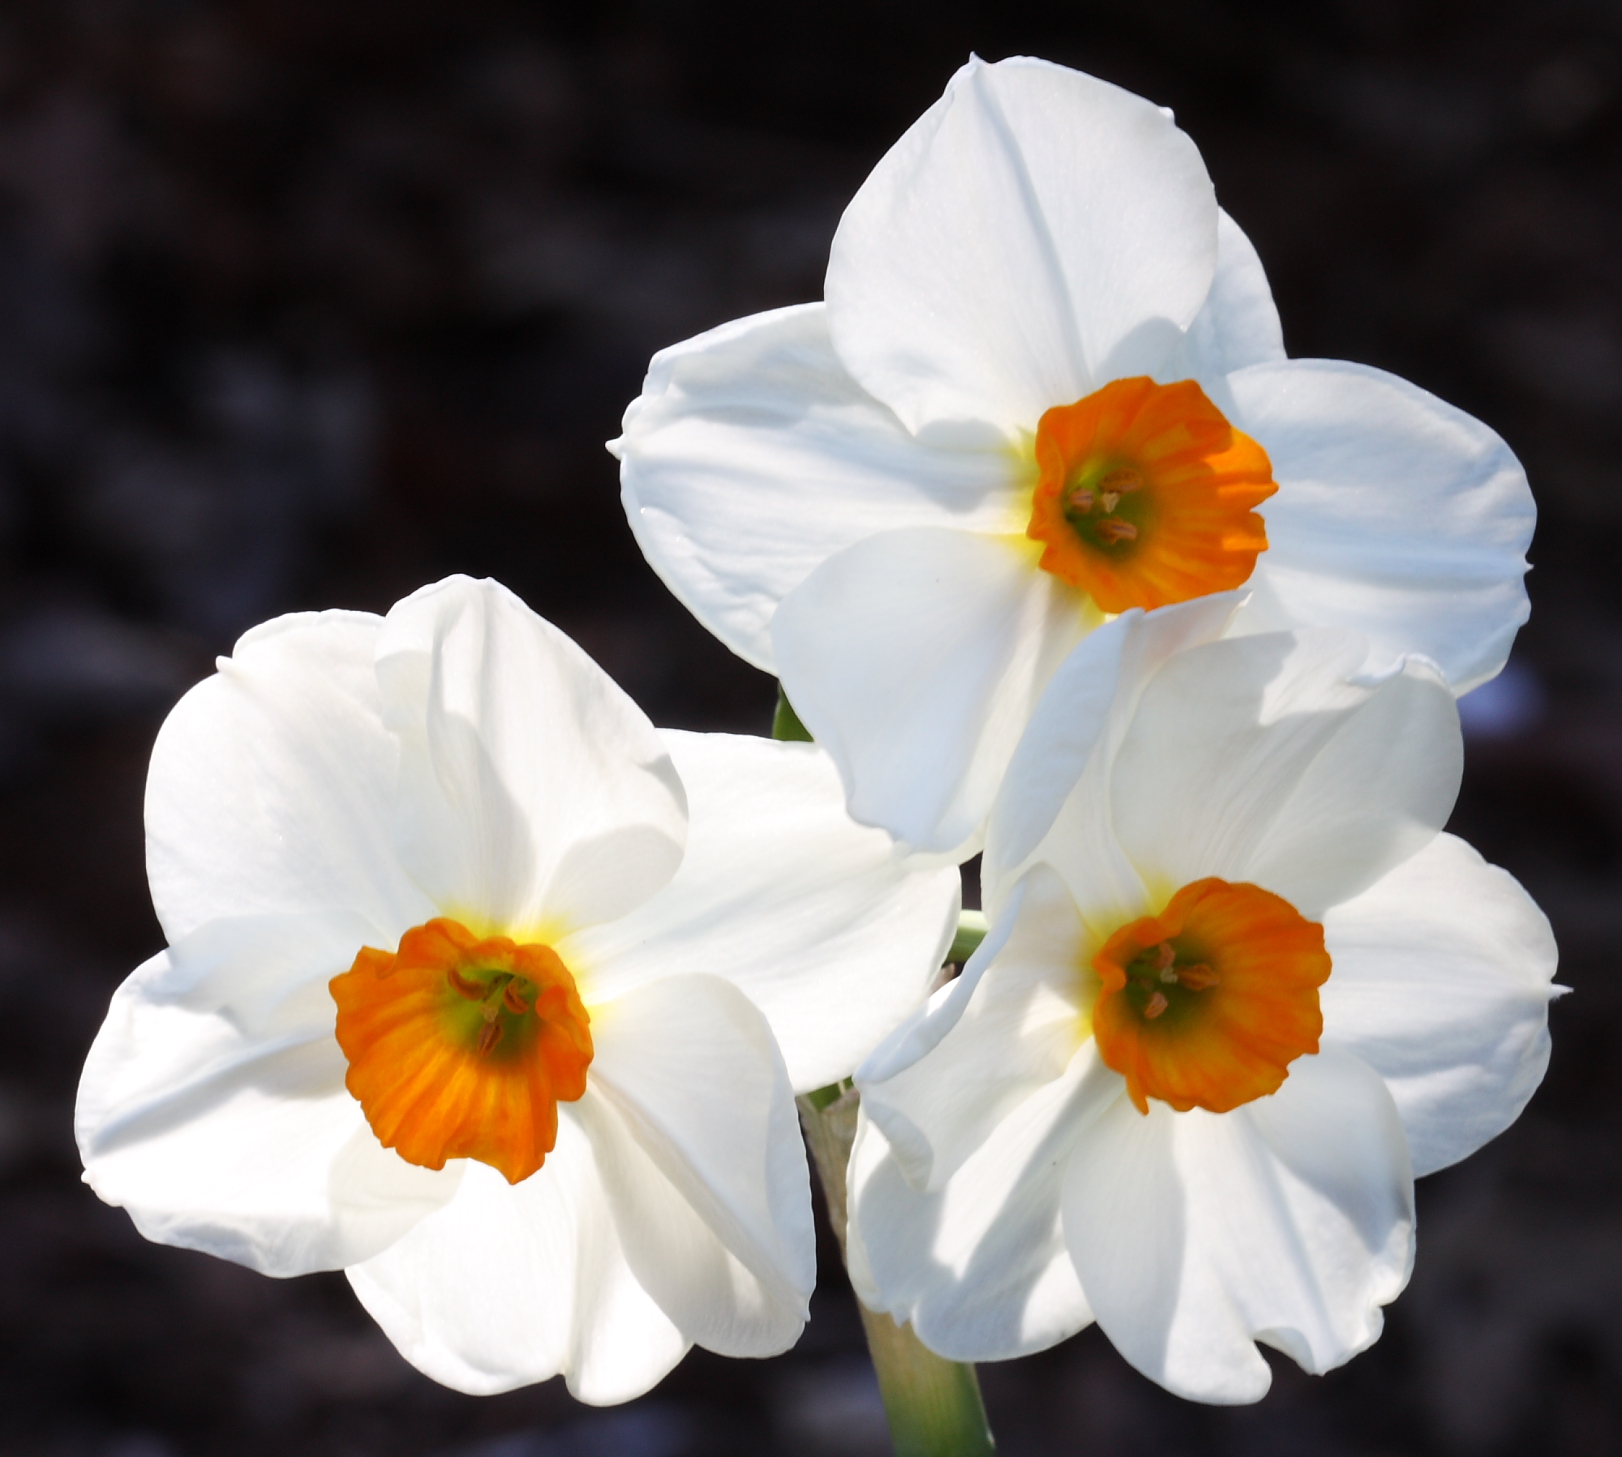 File:Narcissus Geranium.jpg - Wikimedia Commons